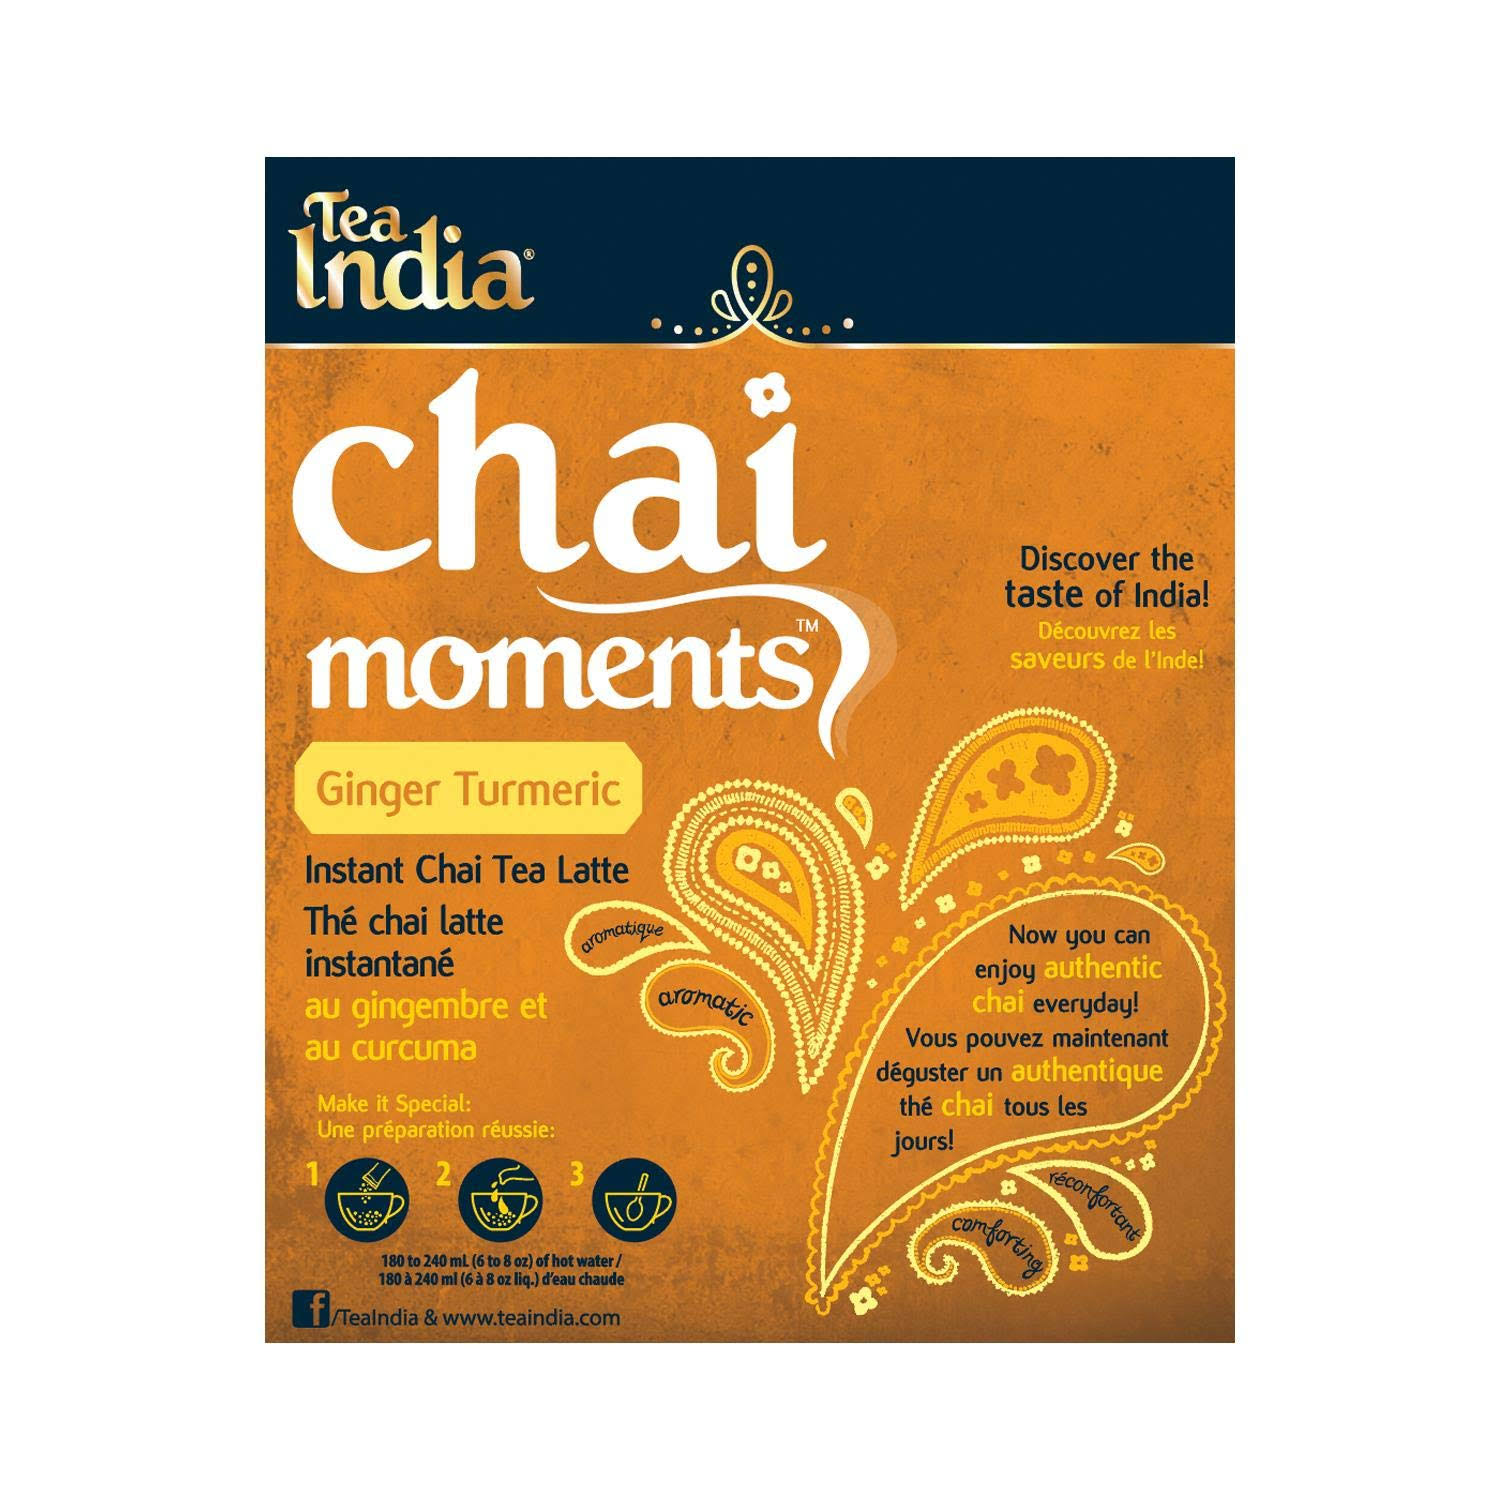 Tea India Chai Moments - Ginger Turmeric Instant Chai Tea Latte